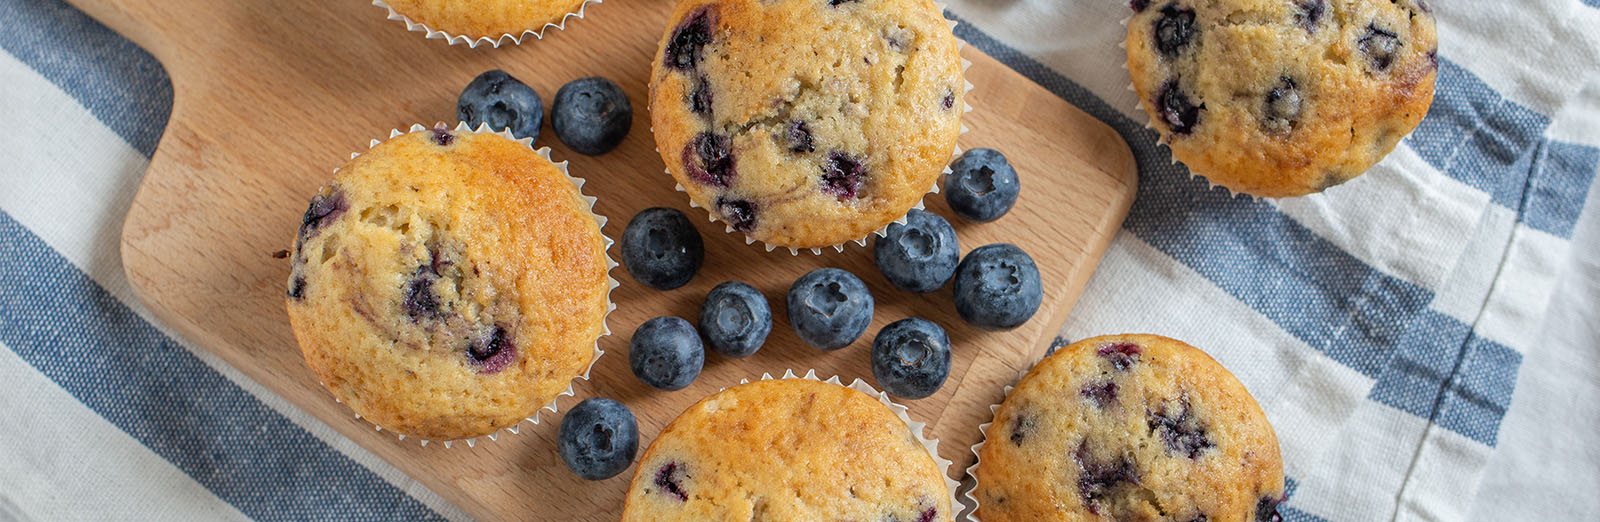 Healthy blueberry muffins-hero image.jpg